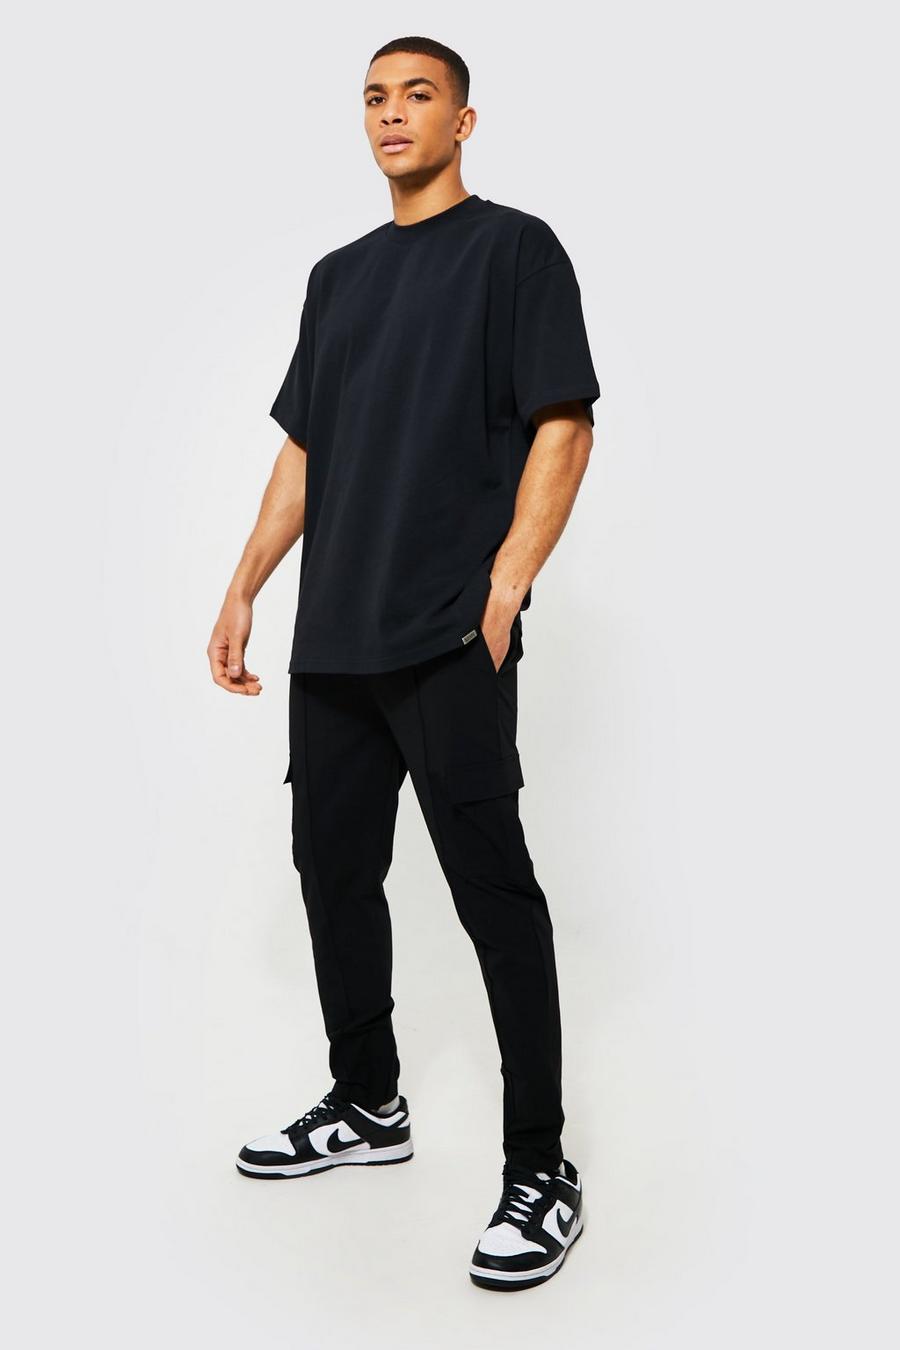 Black Oversized Man T-shirt And Woven Jogger Set